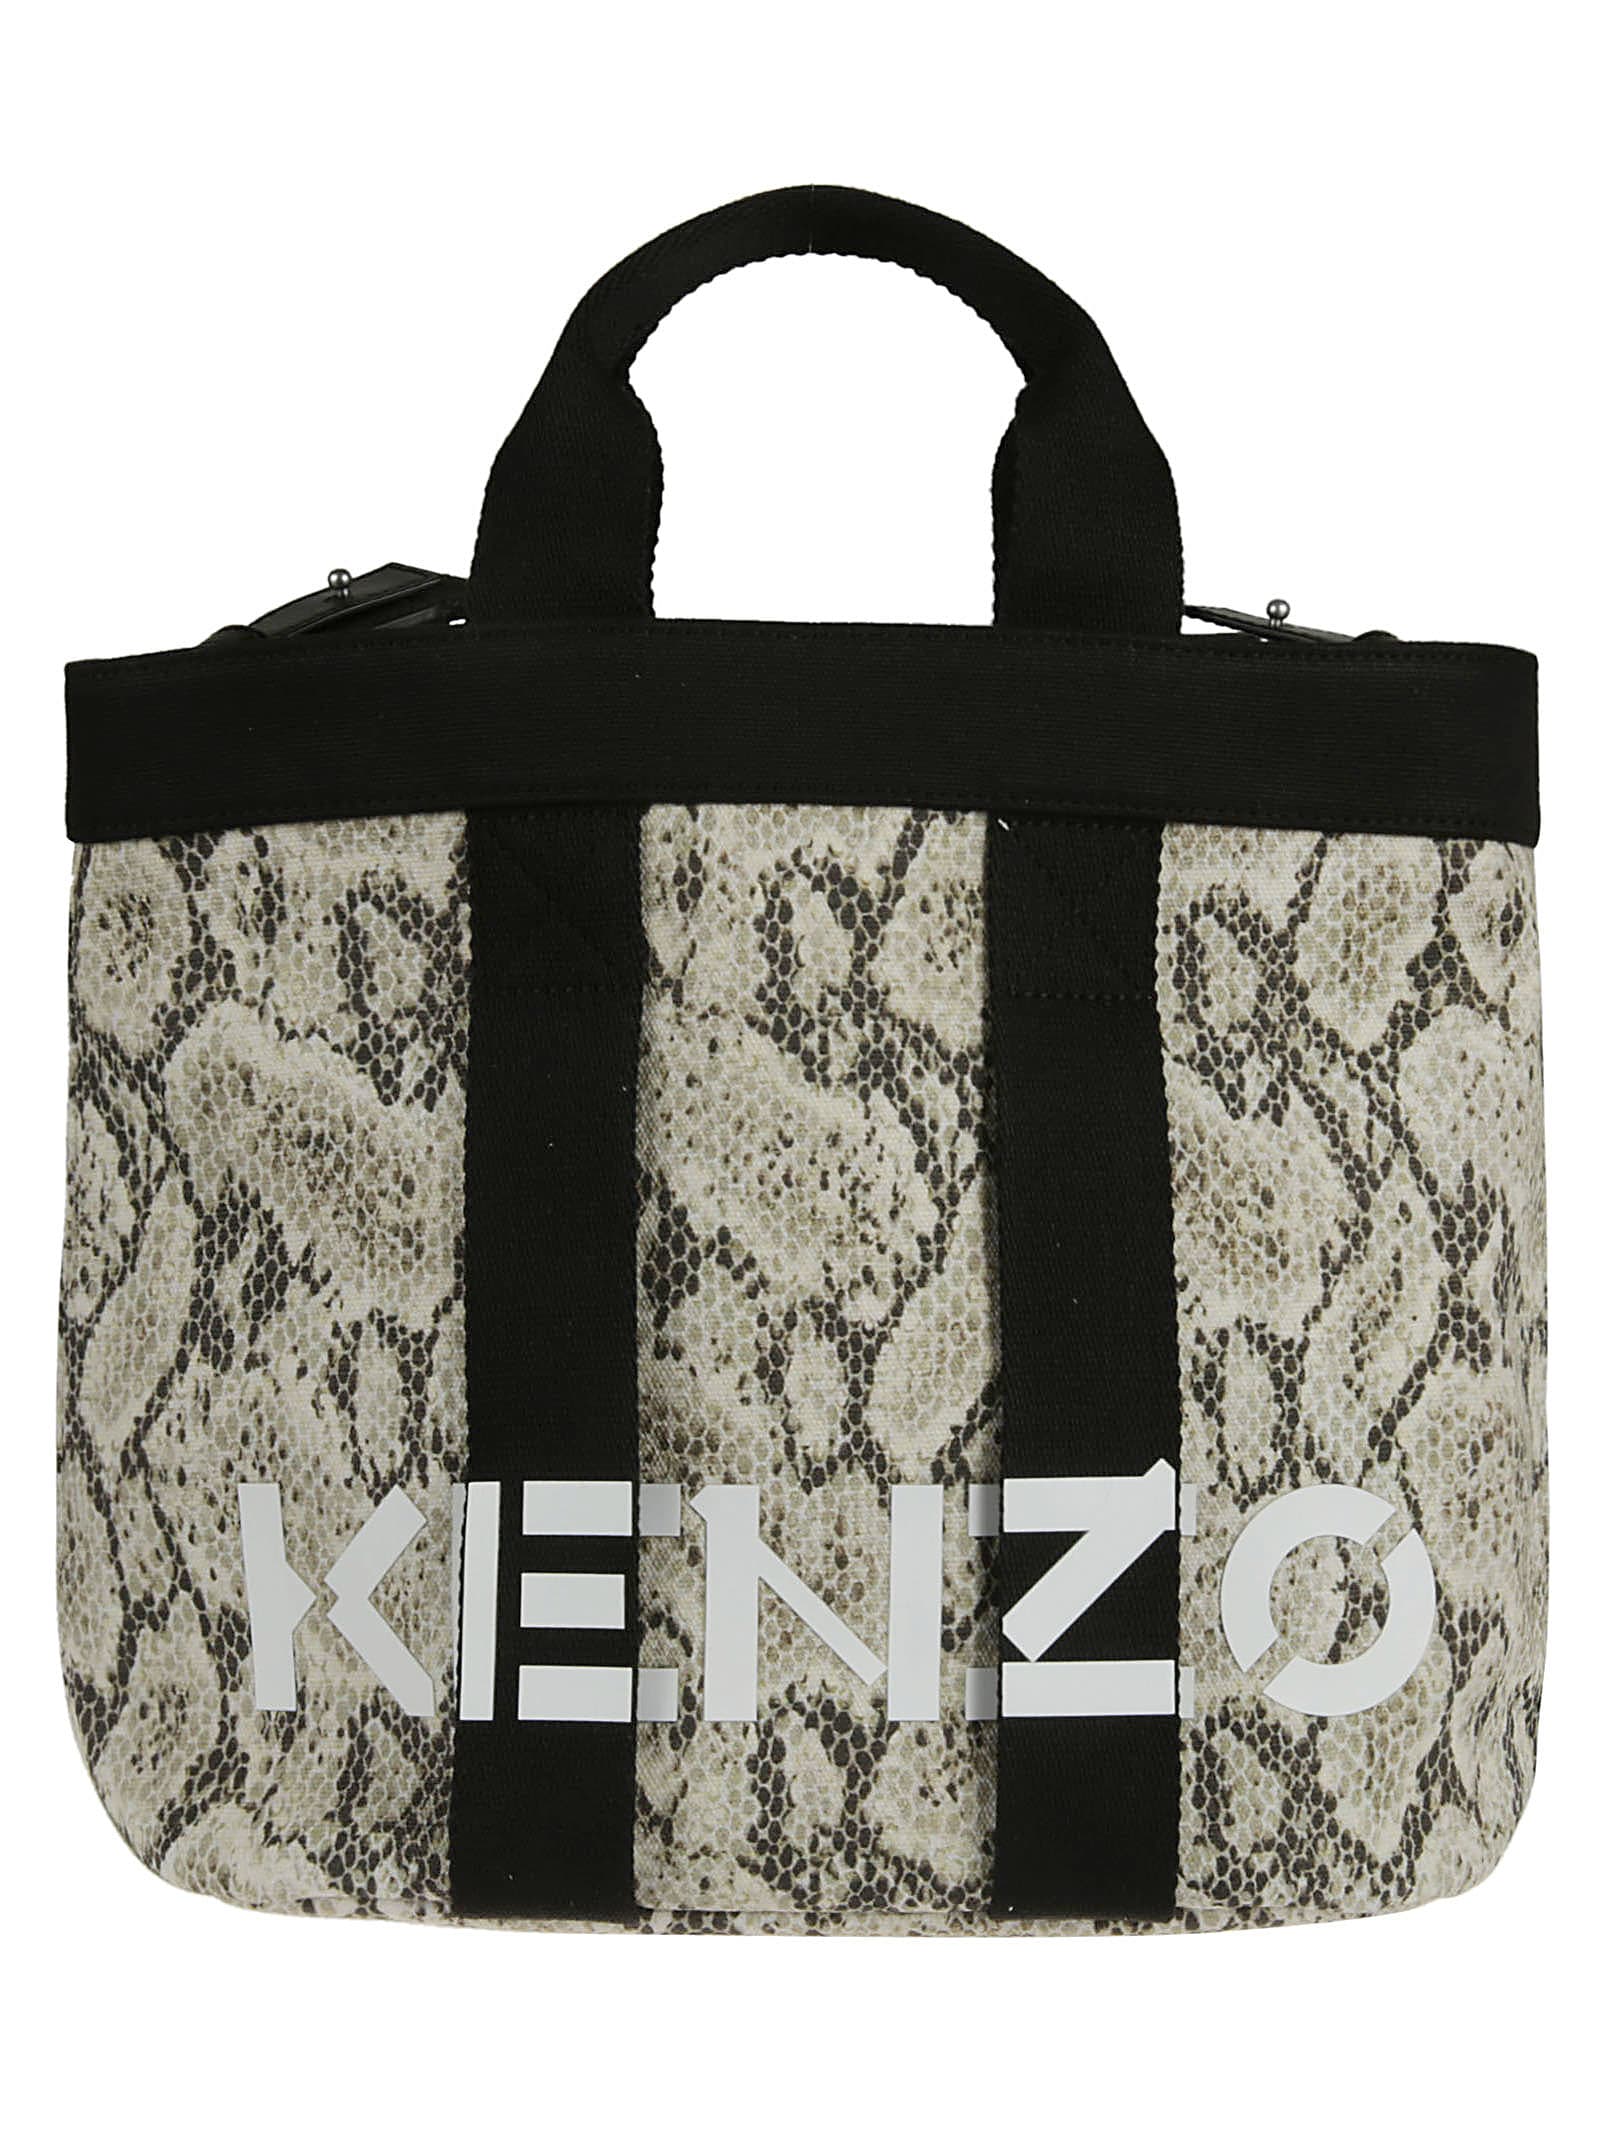 Kenzo Logo Small Tote